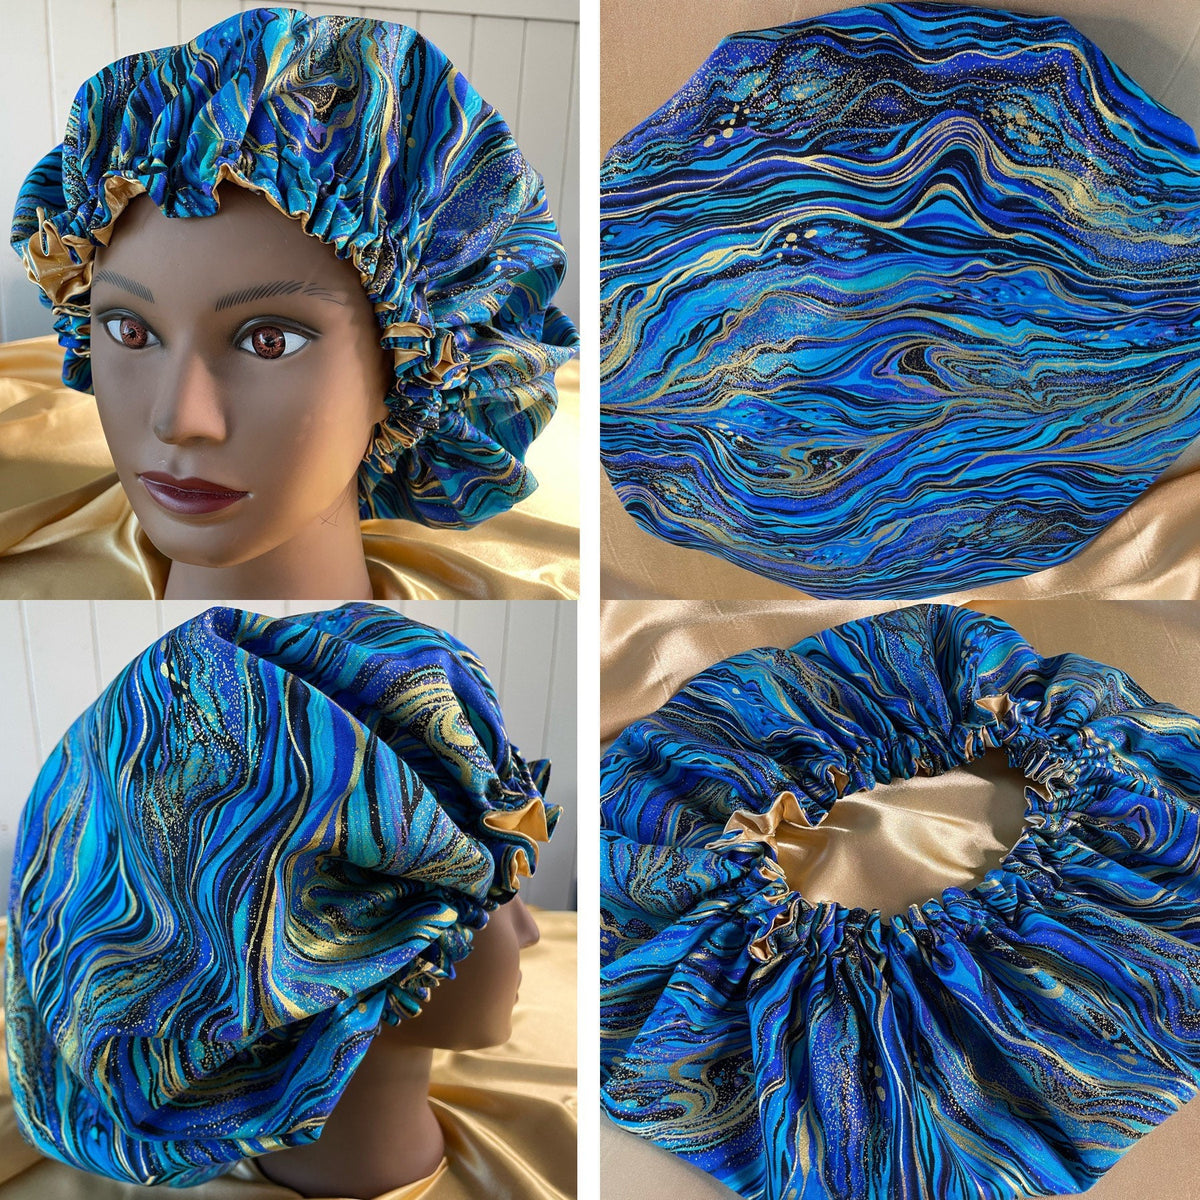 Satin Lined Sleeping Bonnet - Healthy Hair No Frizz Bonnet - Golden Wa